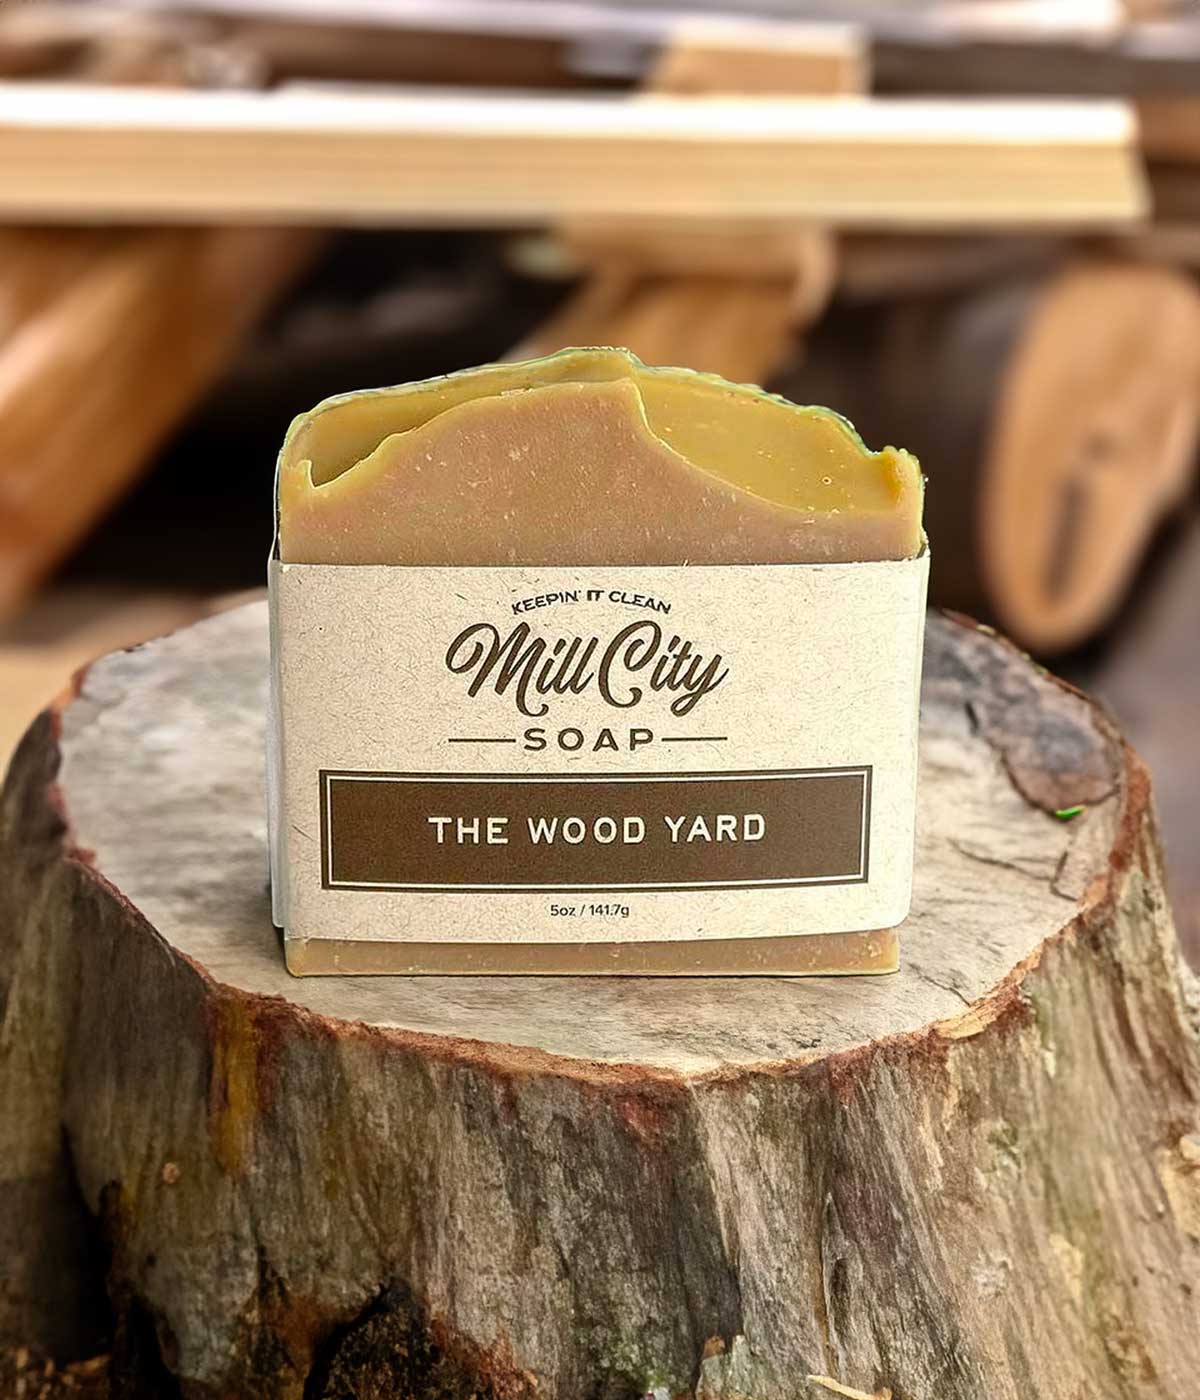 The Wood Yard